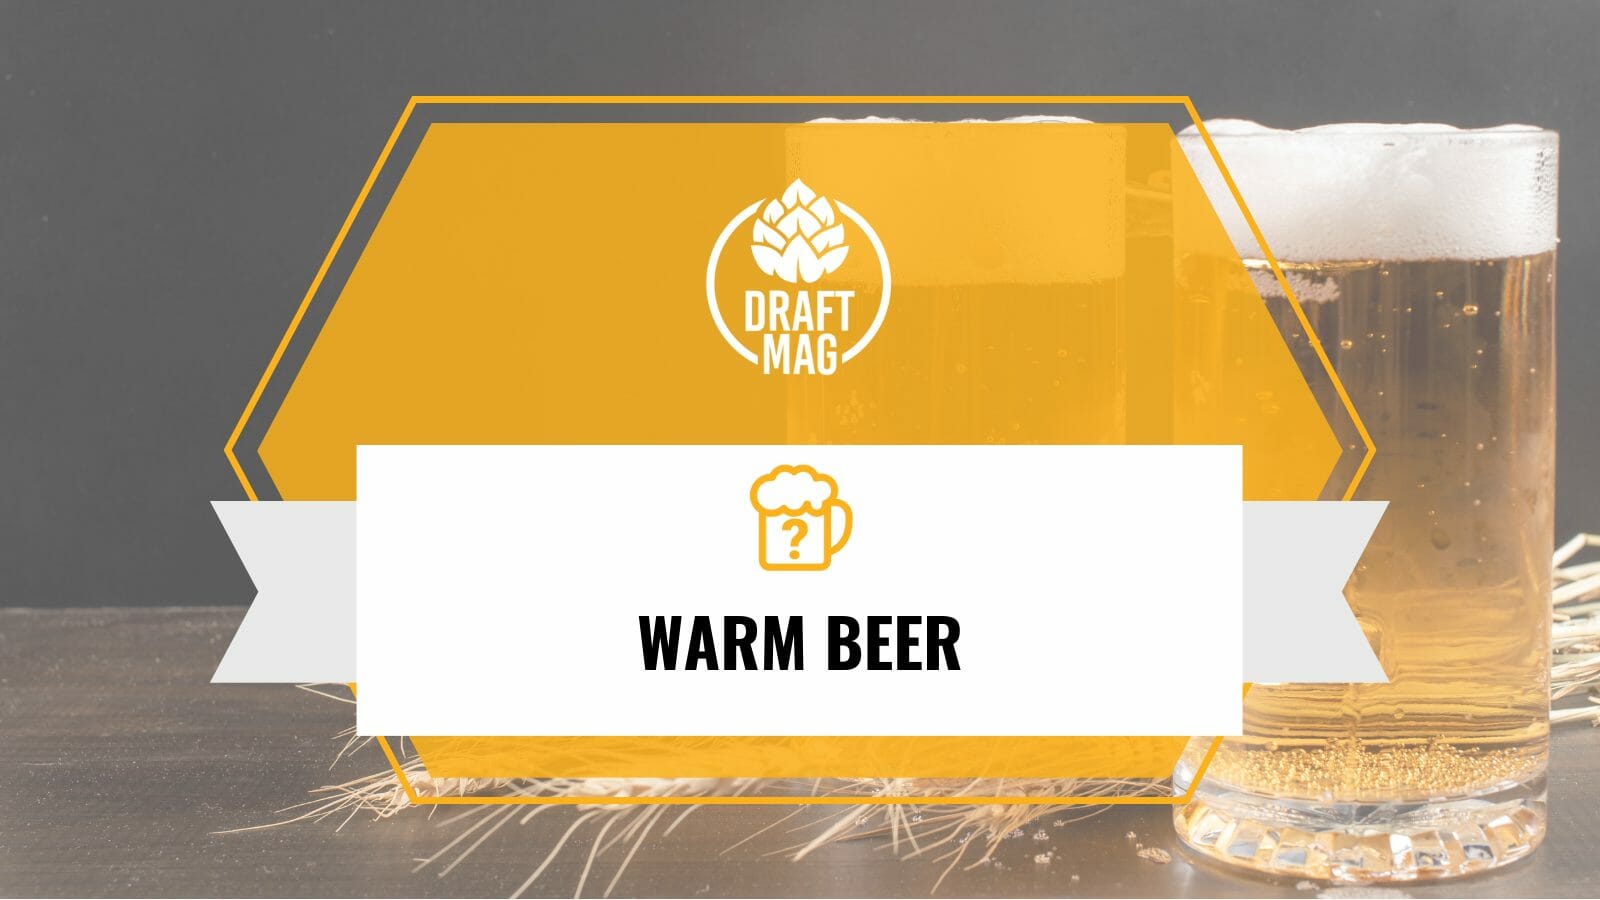 Warm beer complete guide